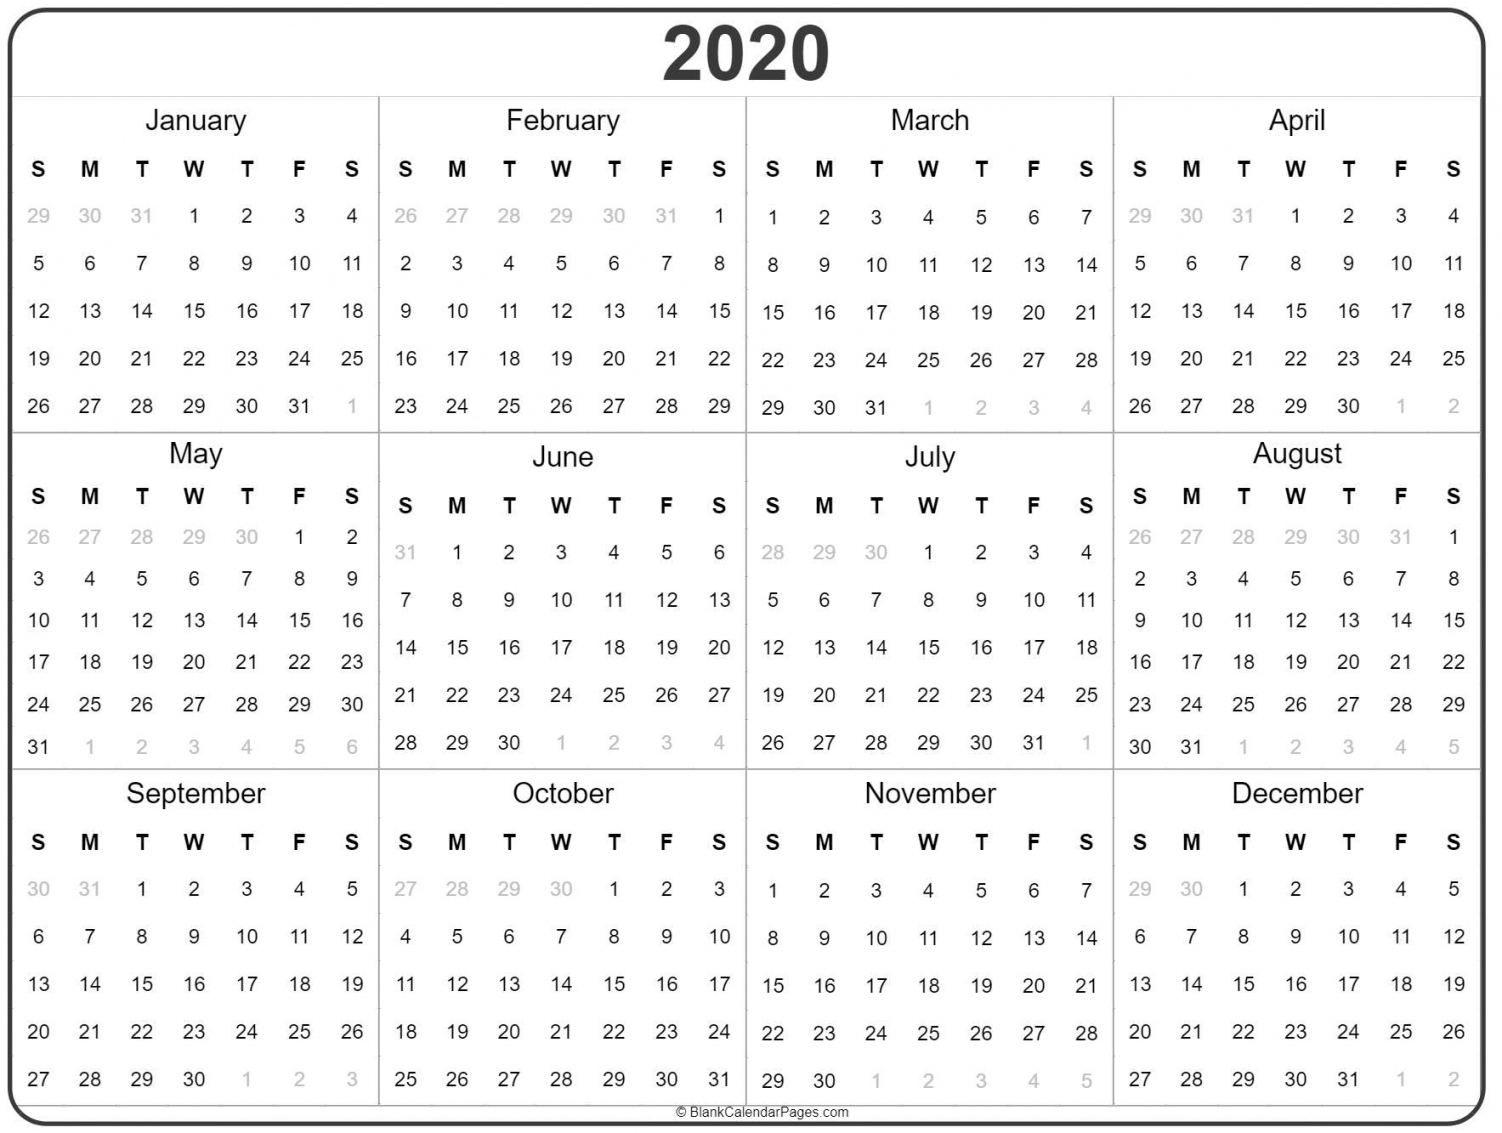 2020 Yearly Calendar Printable